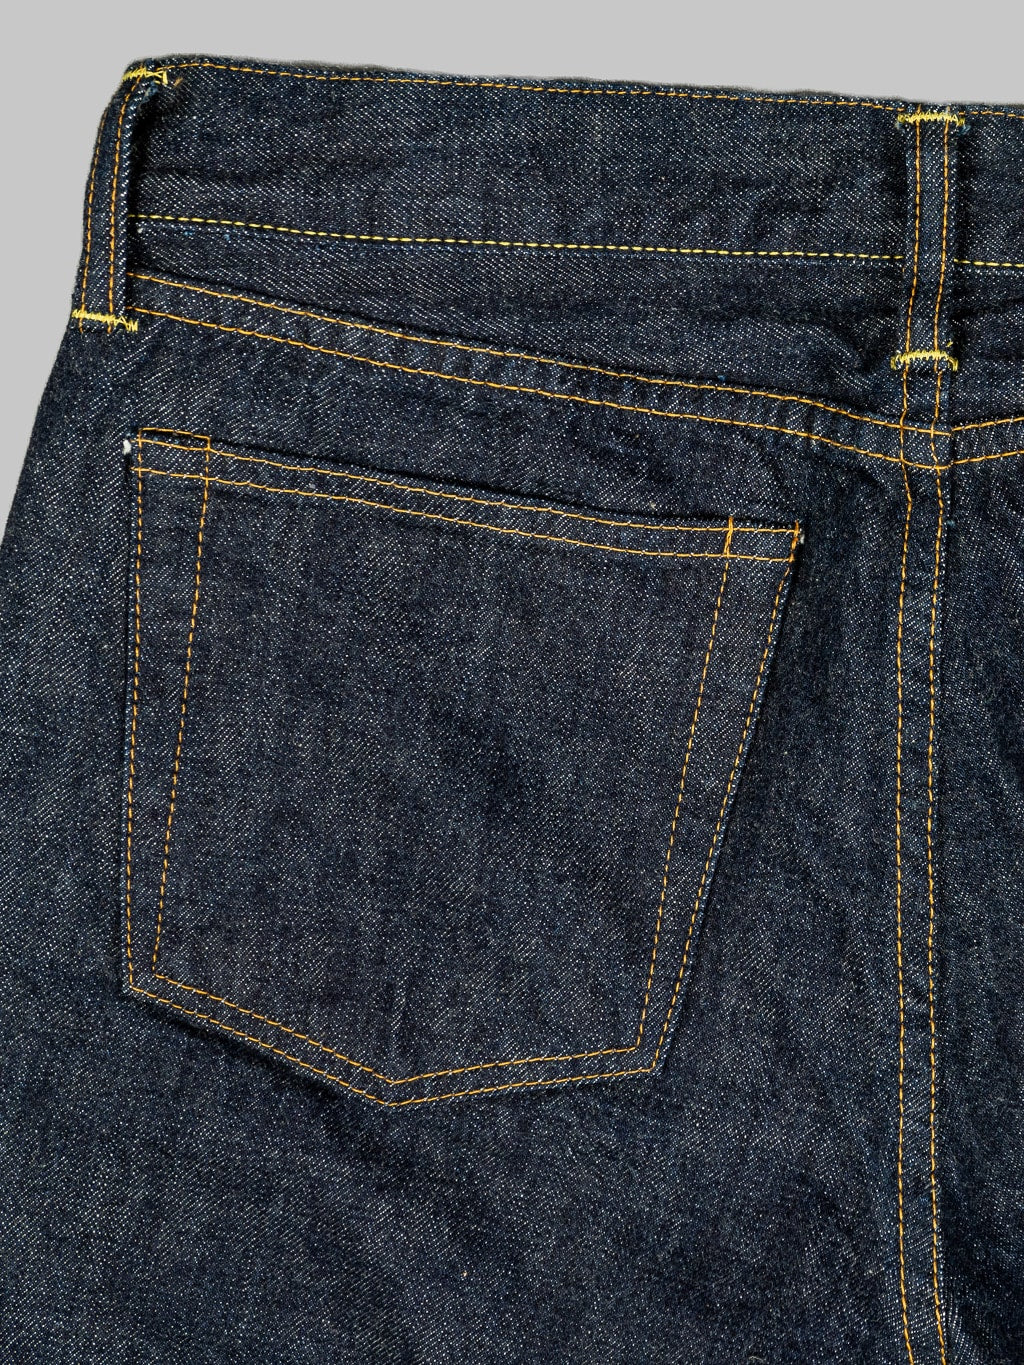 TCB 50s Slim R Jeans  back pocket